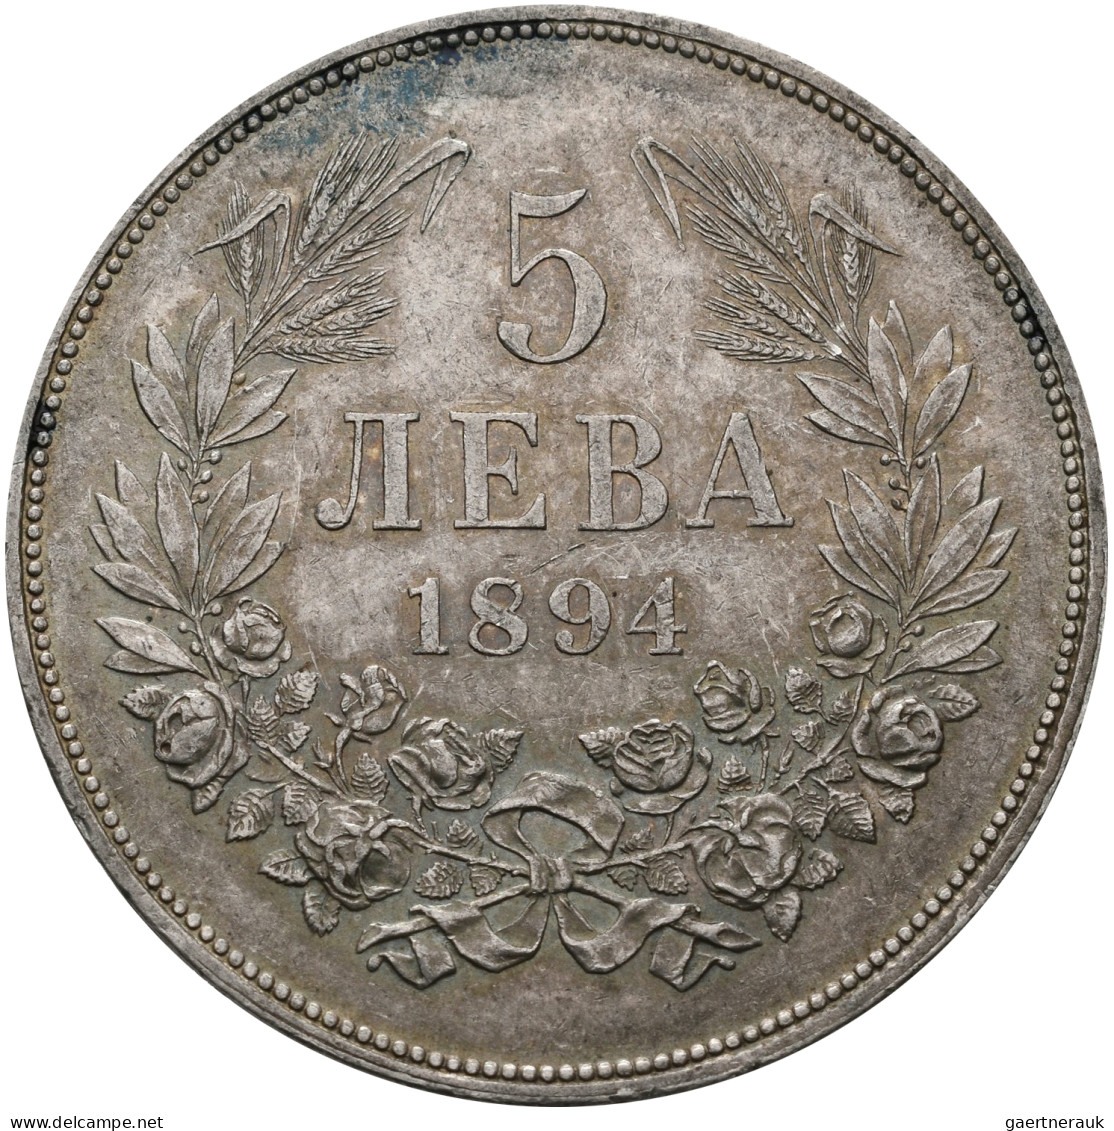 Bulgarien: Ferdinand I. 1887-1908: 5 Leva 1894, KM# 18, Fast Vorzüglich. - Bulgaria